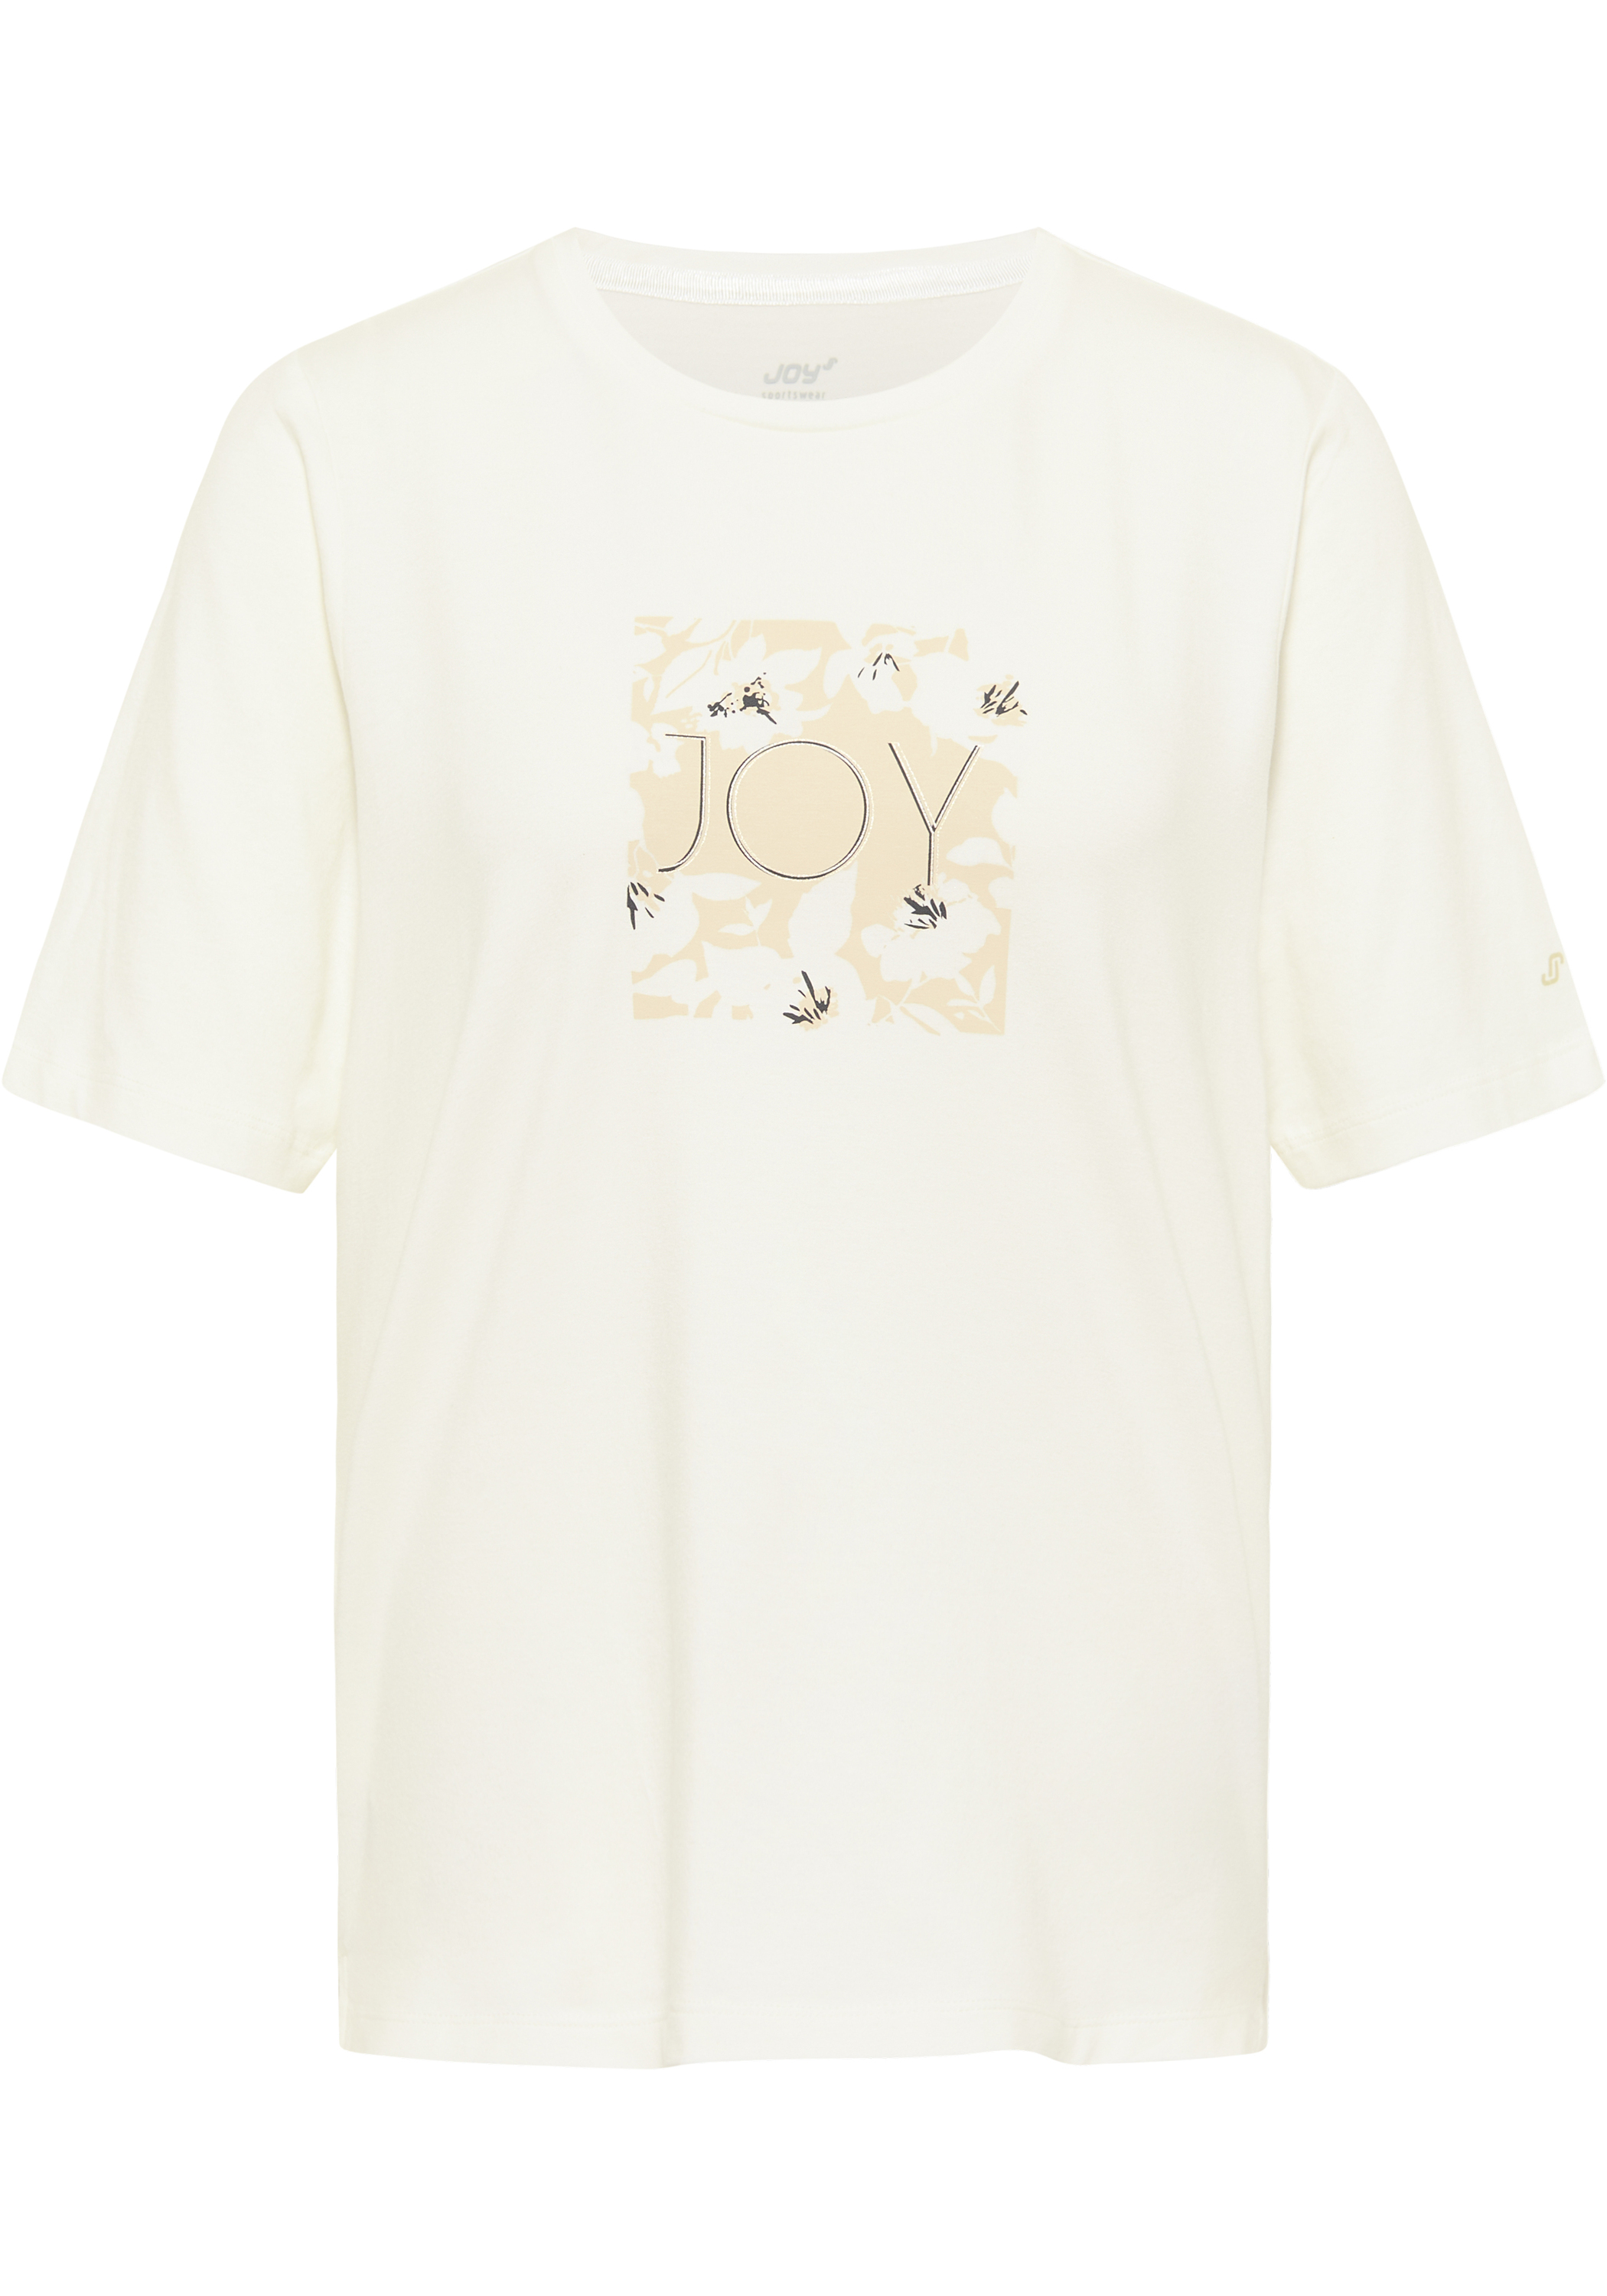 Спортивная футболка Joy Sportswear VIOLA, кремовый